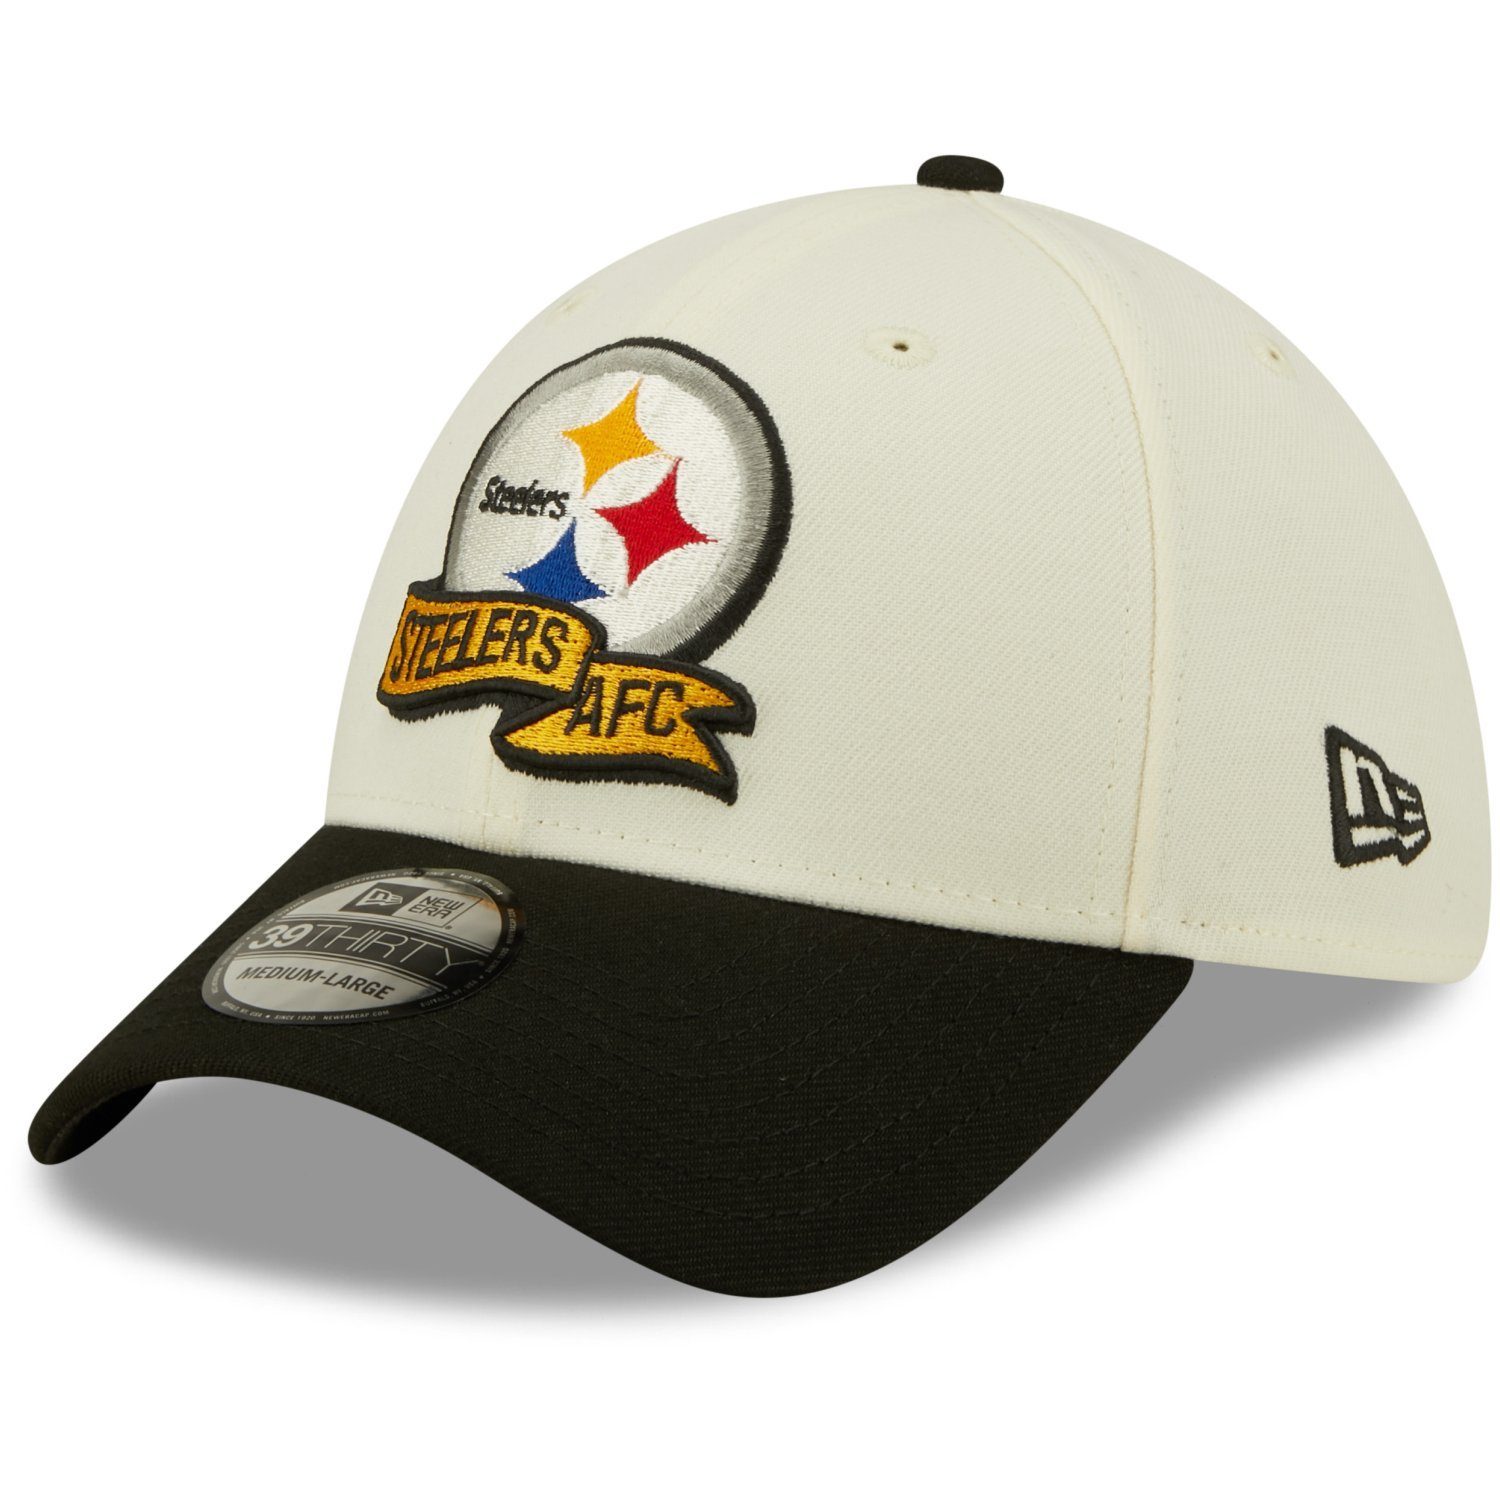 New Era Flex Cap Pittsburgh 39Thirty Steelers SIDELINE 2022